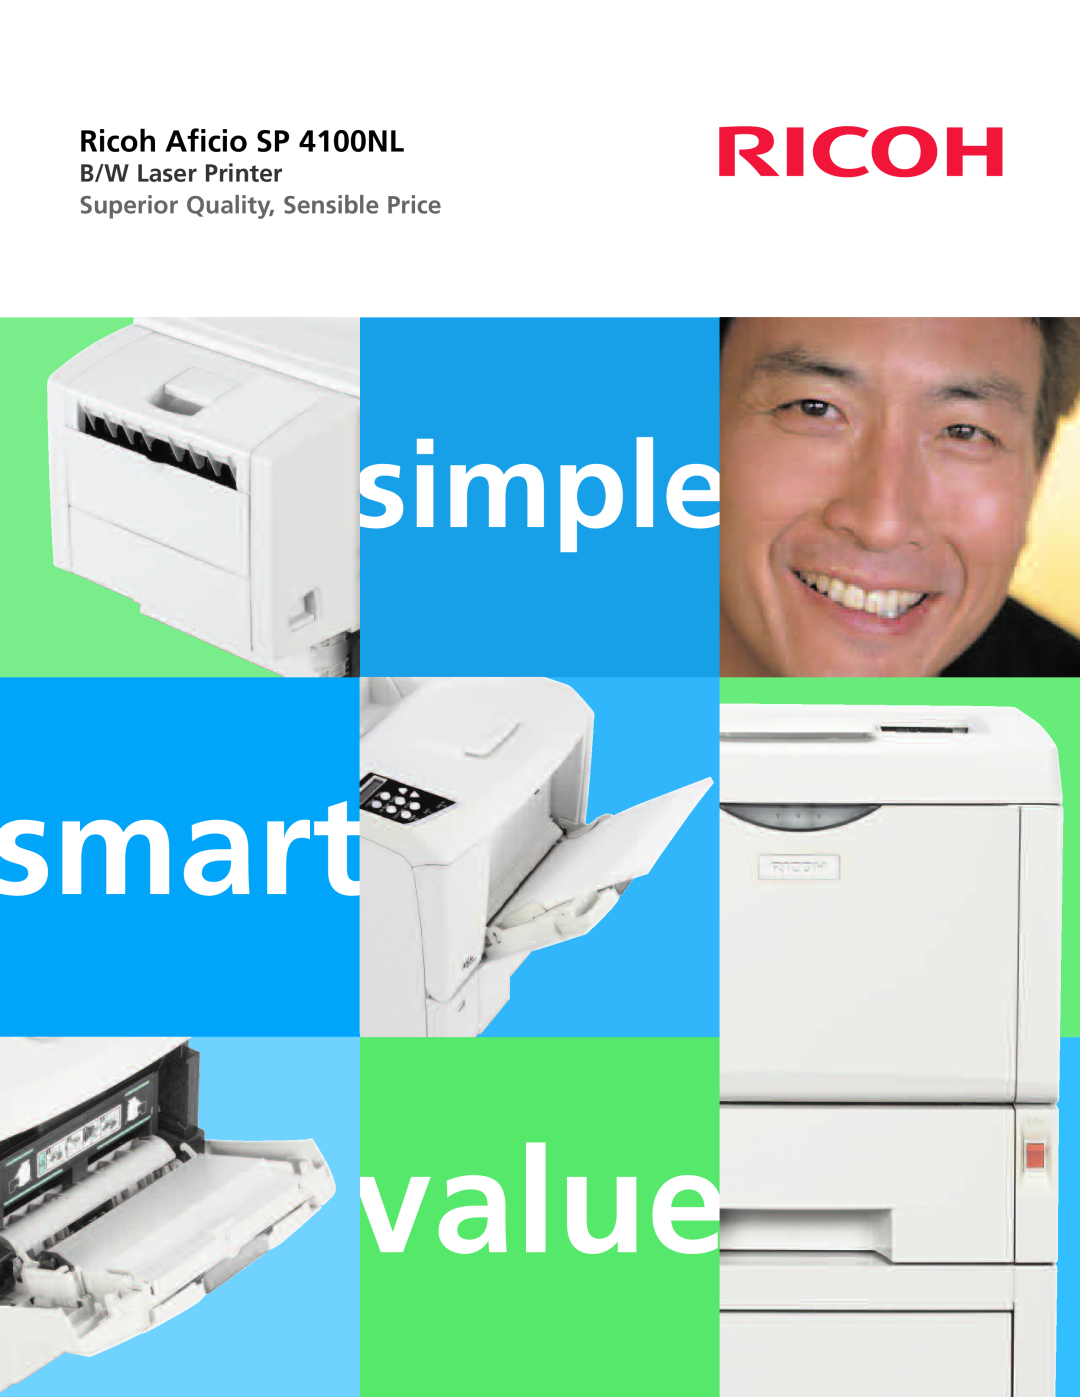 Ricoh 402304 manual value, smart, simple, Ricoh Aficio SP 4100NL, B/W Laser Printer, Superior Quality, Sensible Price 